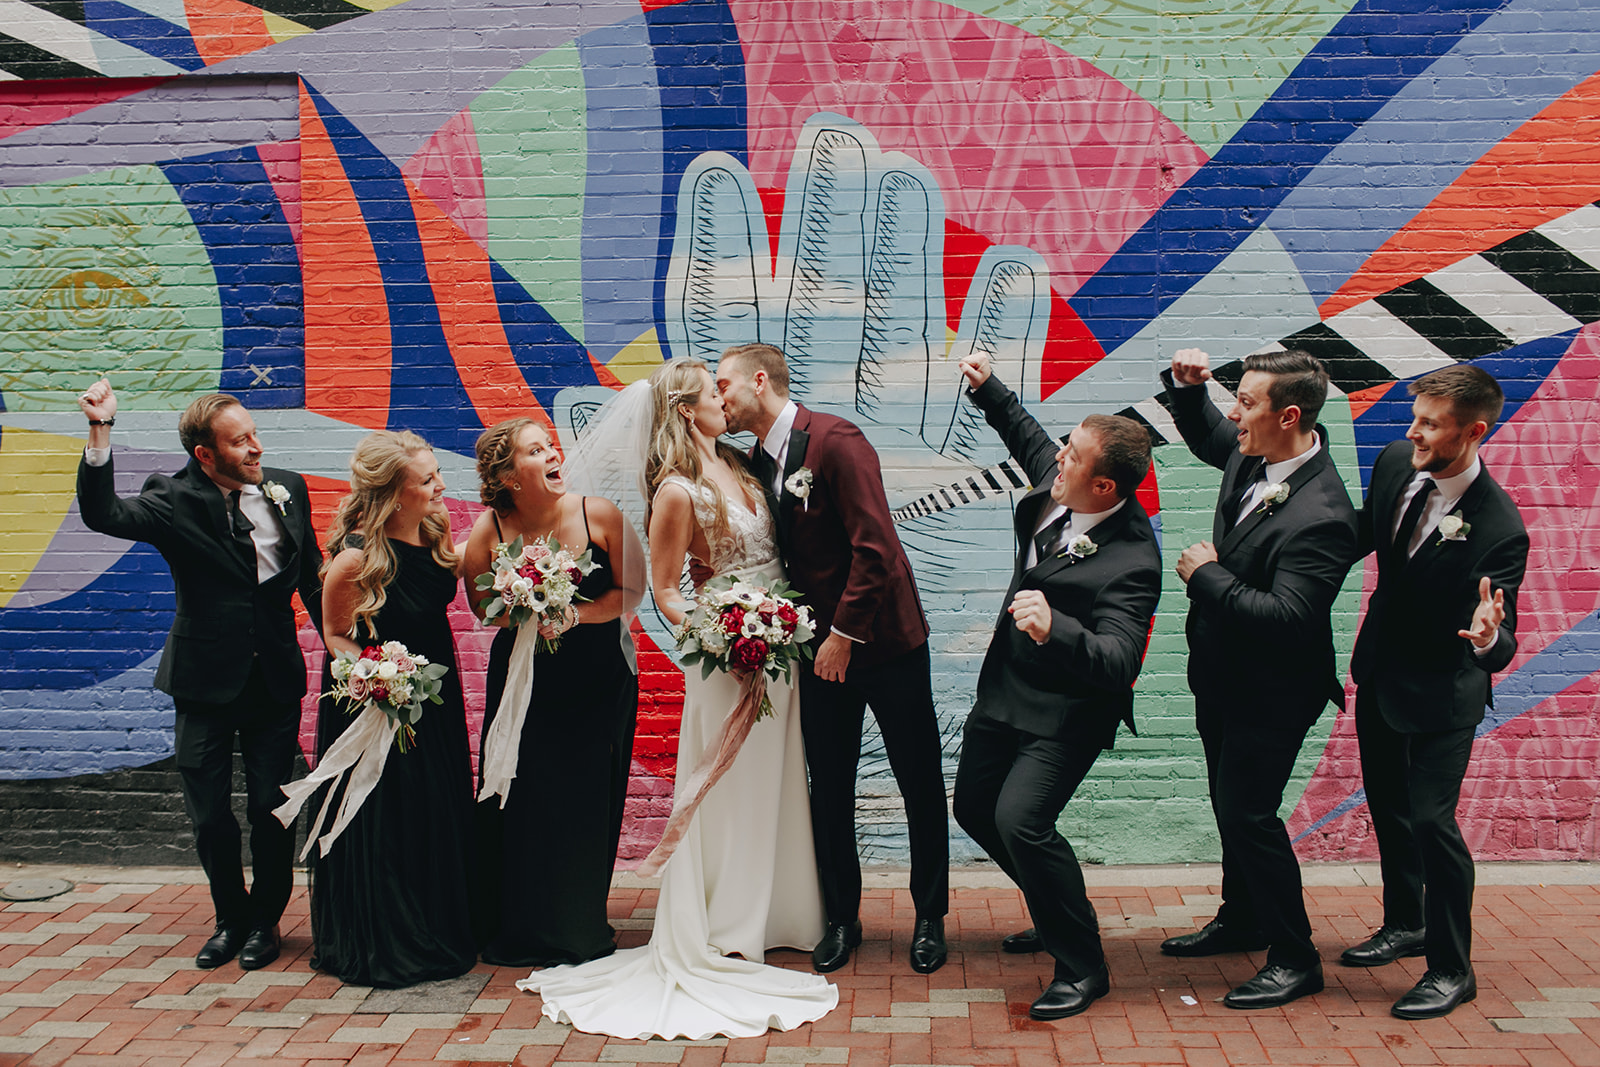 wedding scene with bride and groom, confetti falling